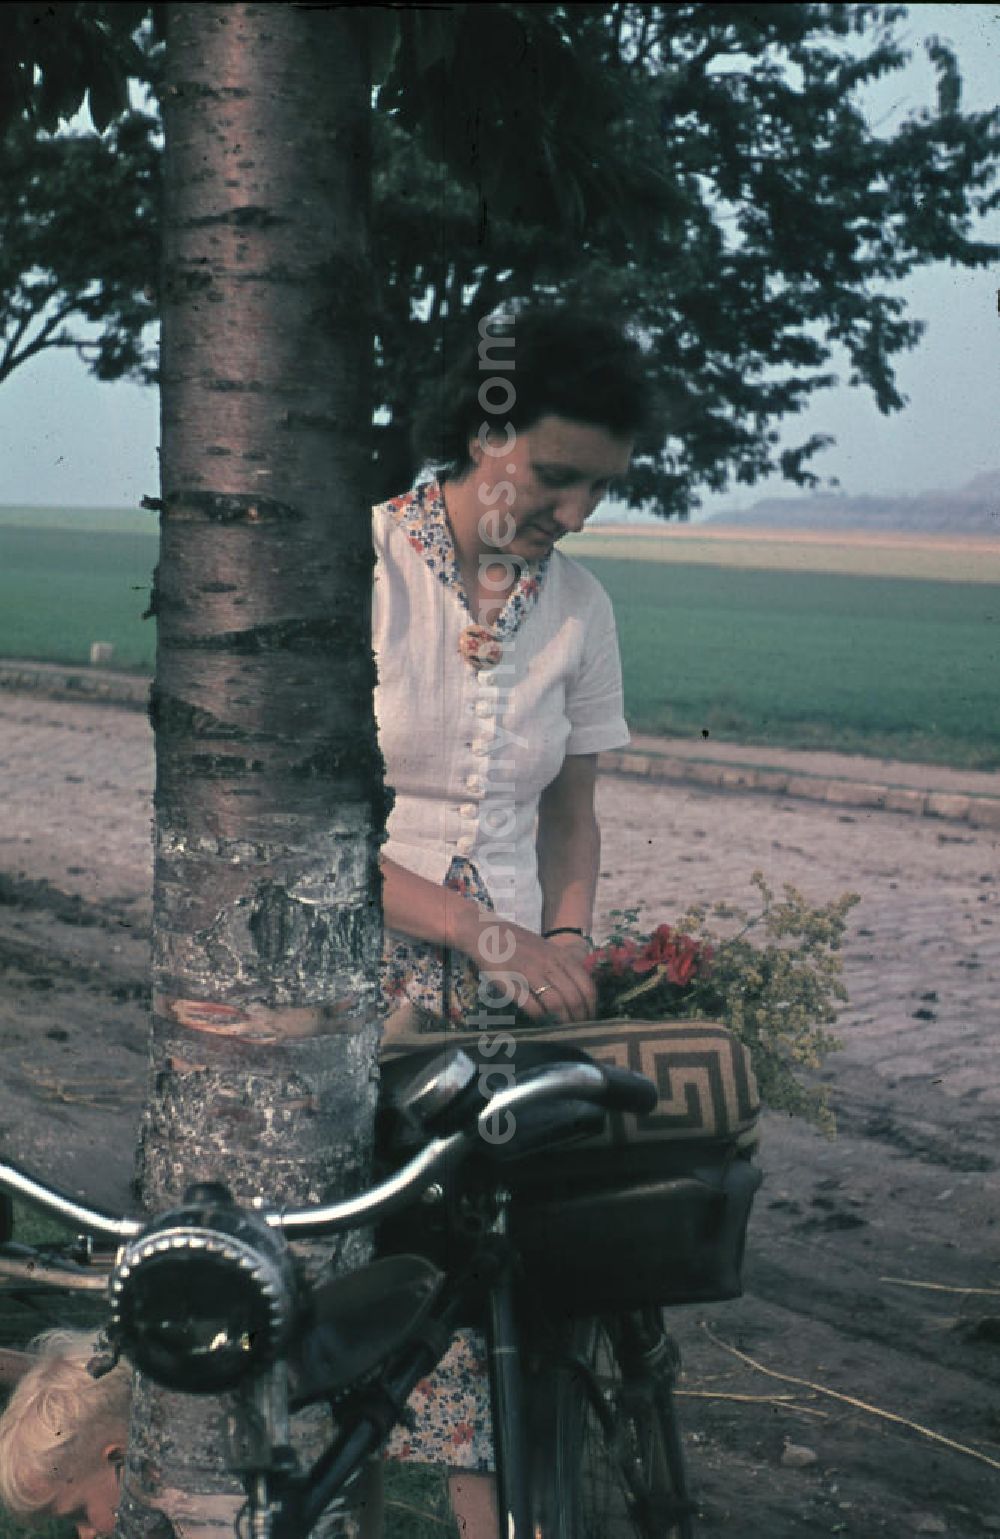 GDR photo archive: Merseburg - Fahrradtour bei Merseburg, Frau während einer Pause. Bicycle Tour in Merseburg, woman during a break.